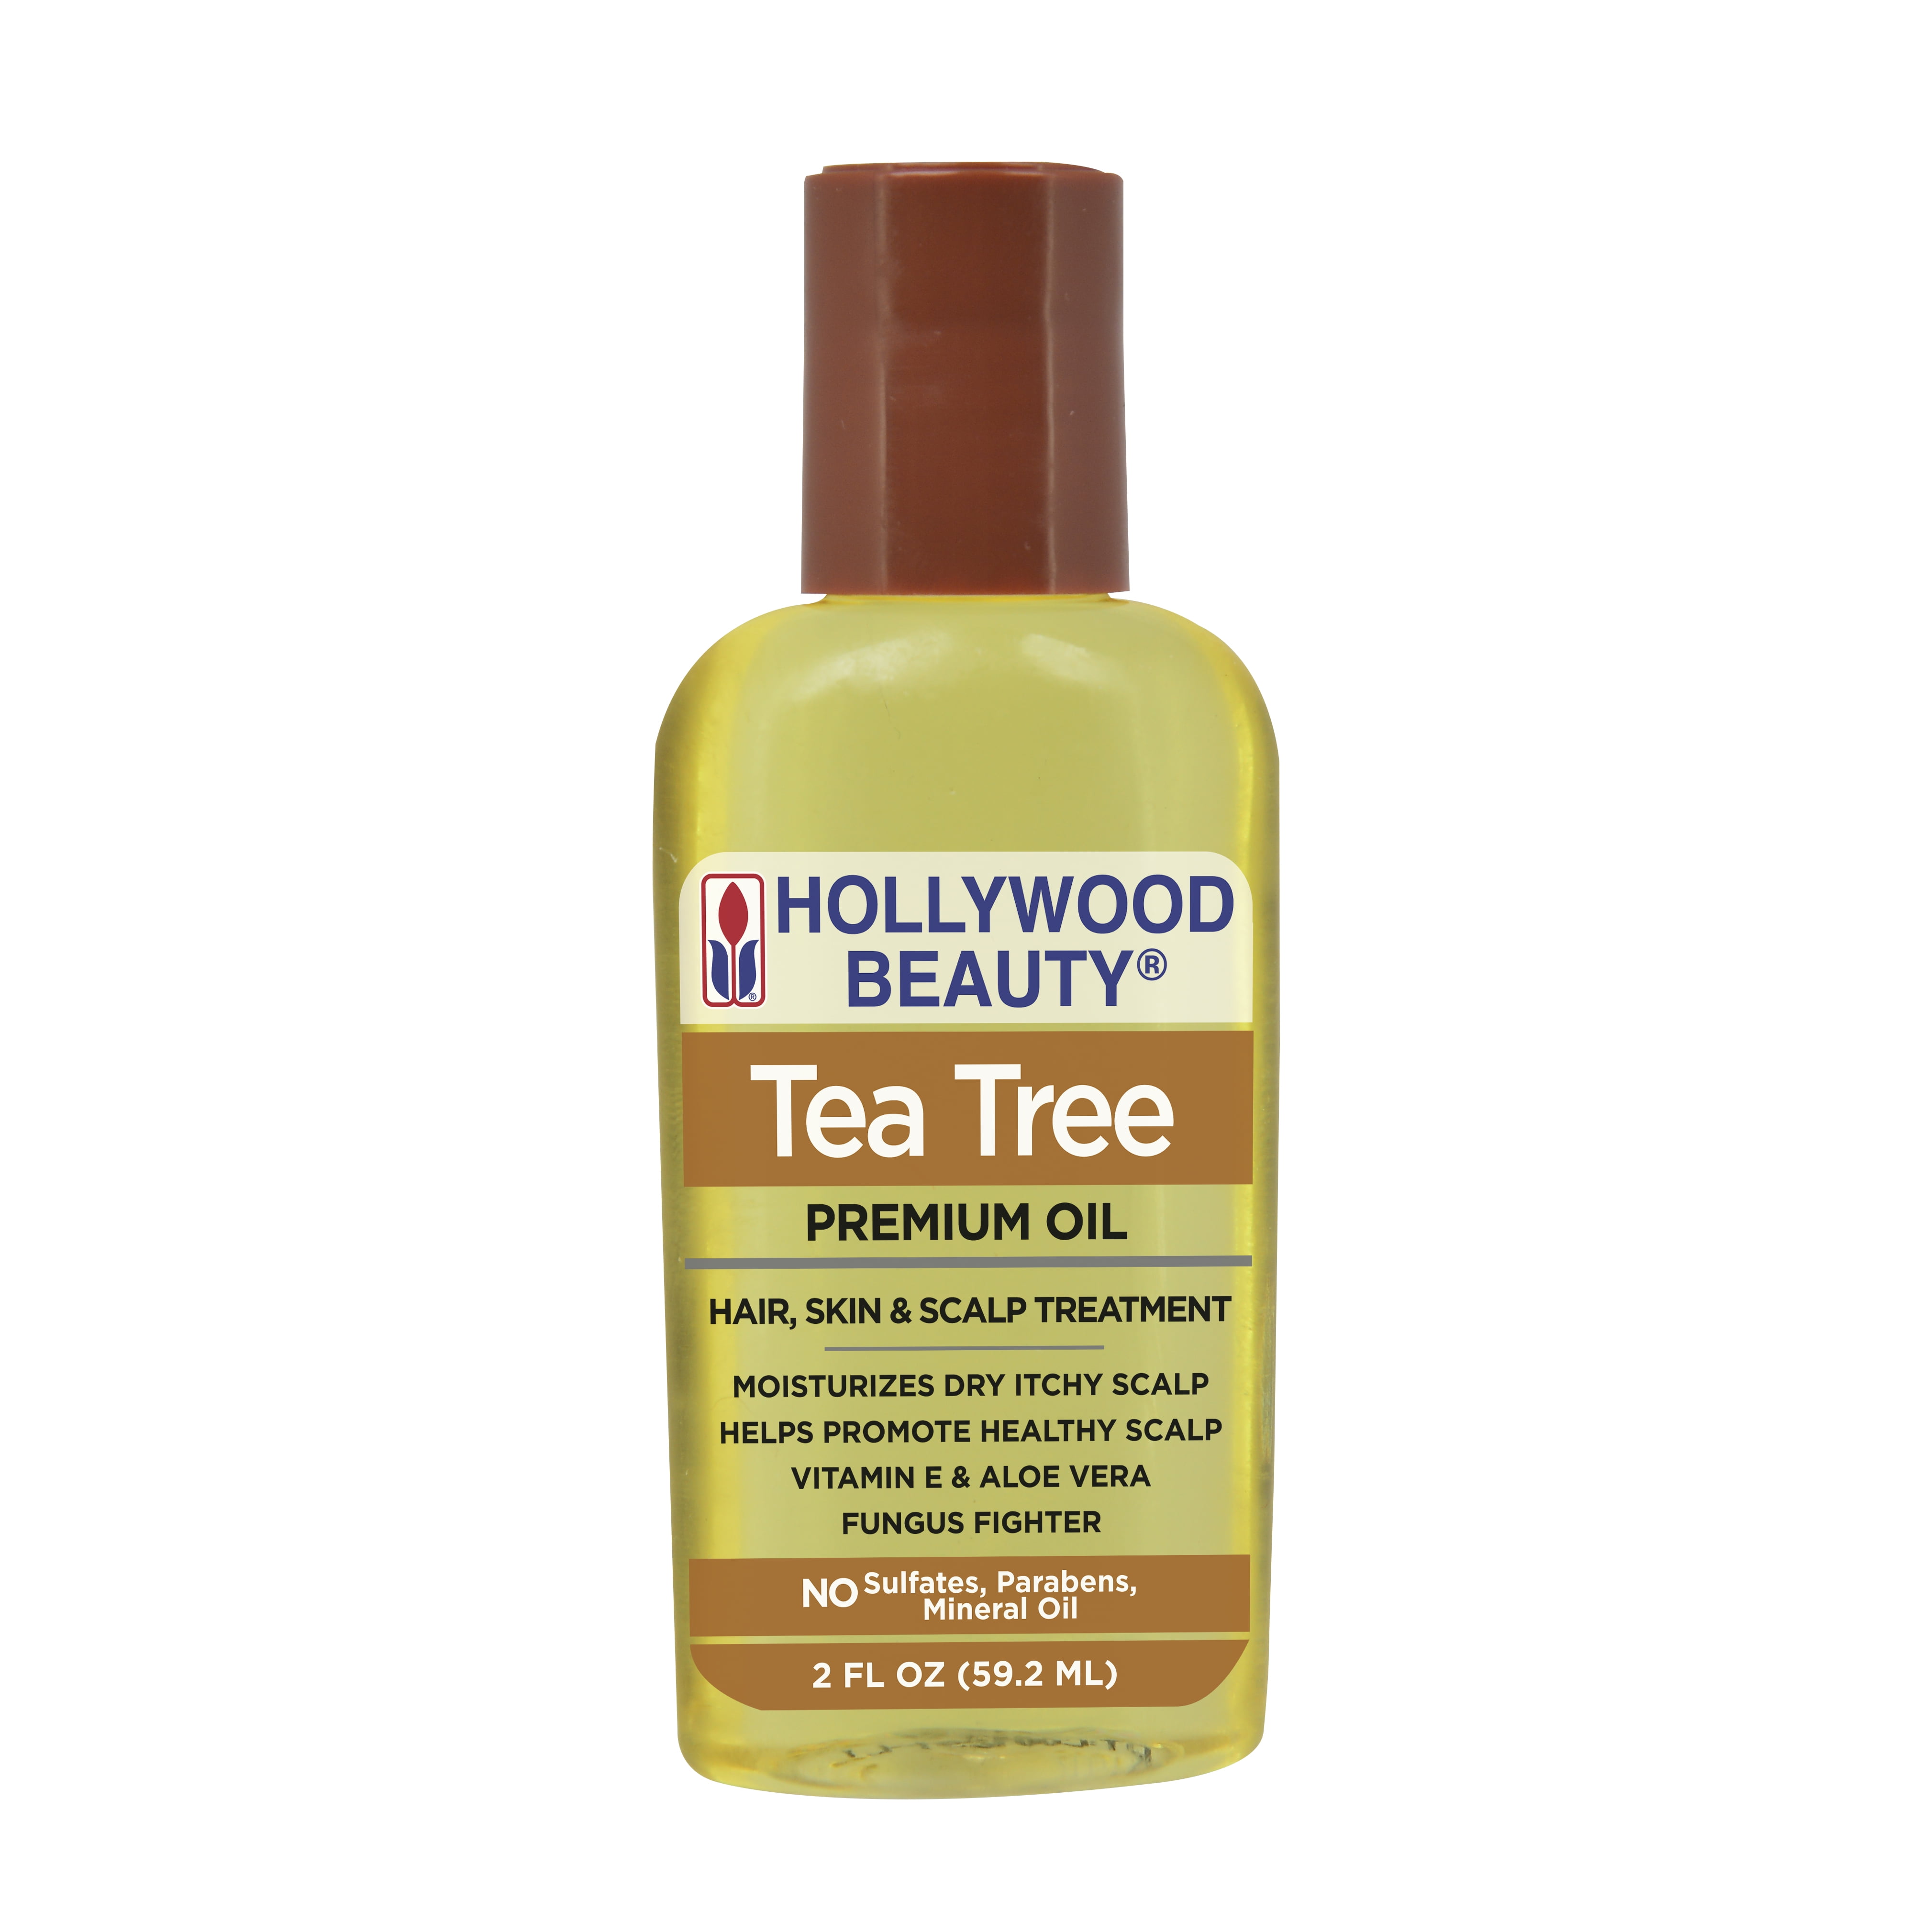 Hollywood Beauty Tea Tree Oil, Vitamin E & Aloe Vera Moisturizing Dandruff Relief Skin and Scalp Treatment, 2 oz, Travel Size